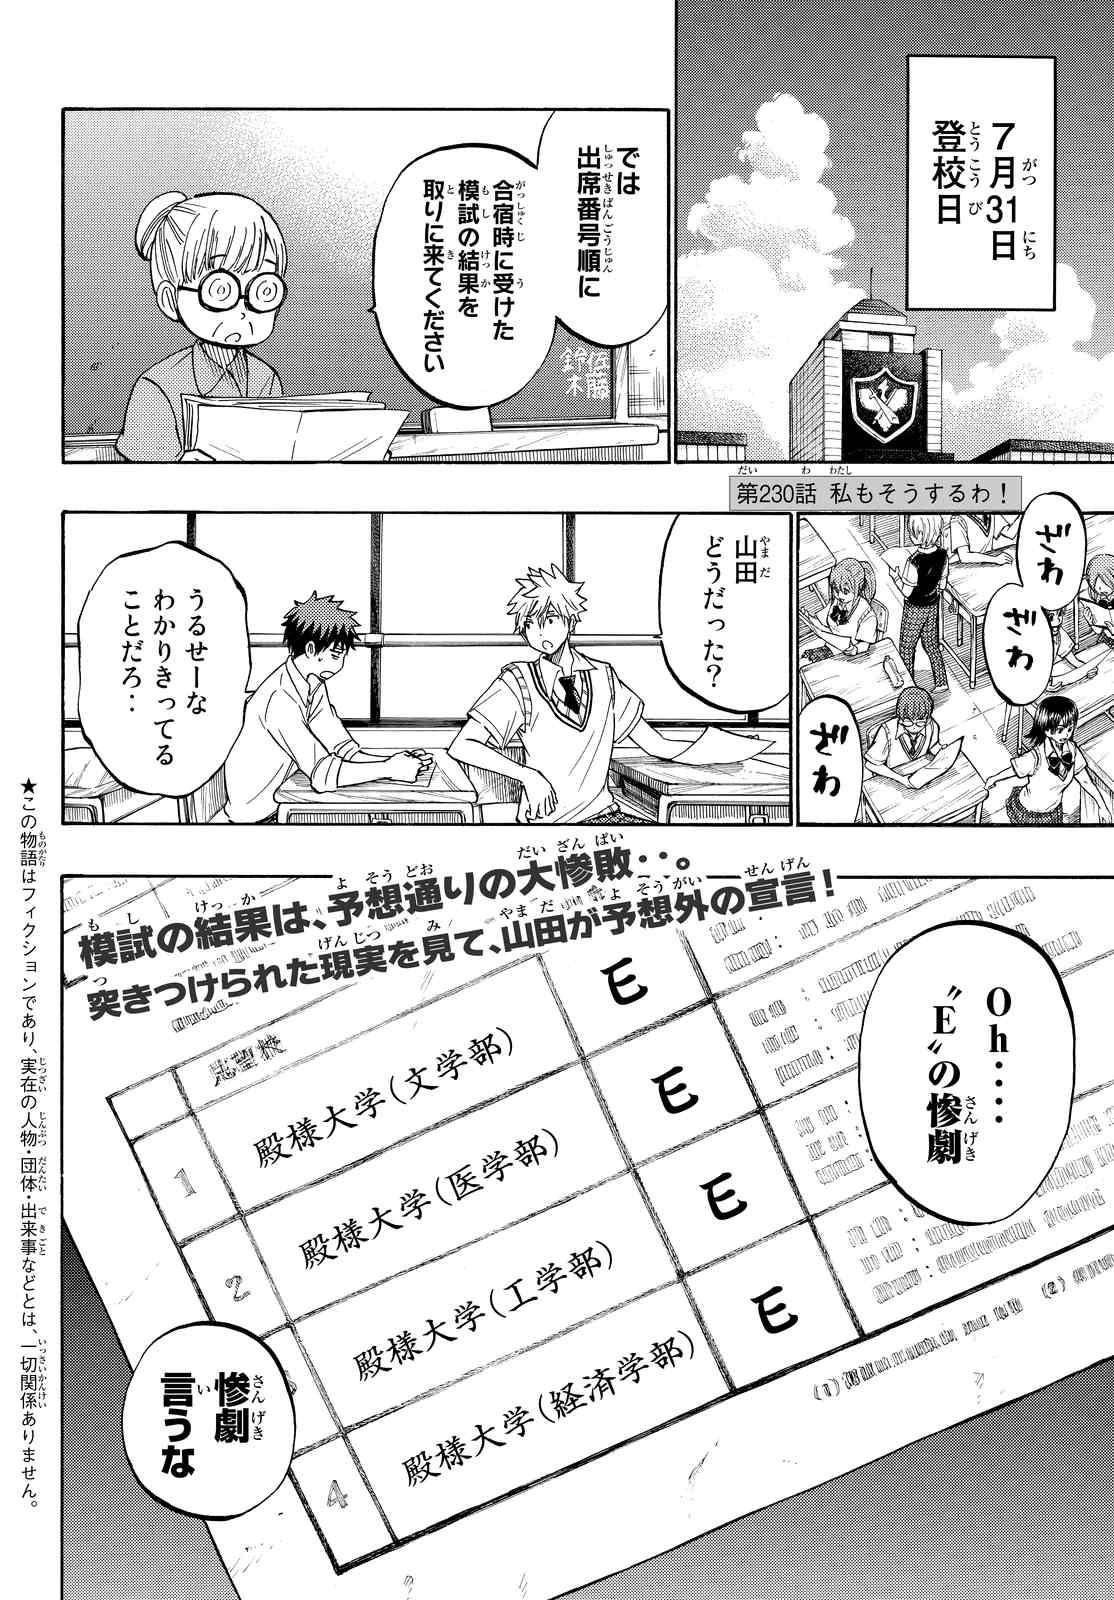 Yamada-kun to 7-nin no Majo - Chapter 230 - Page 2